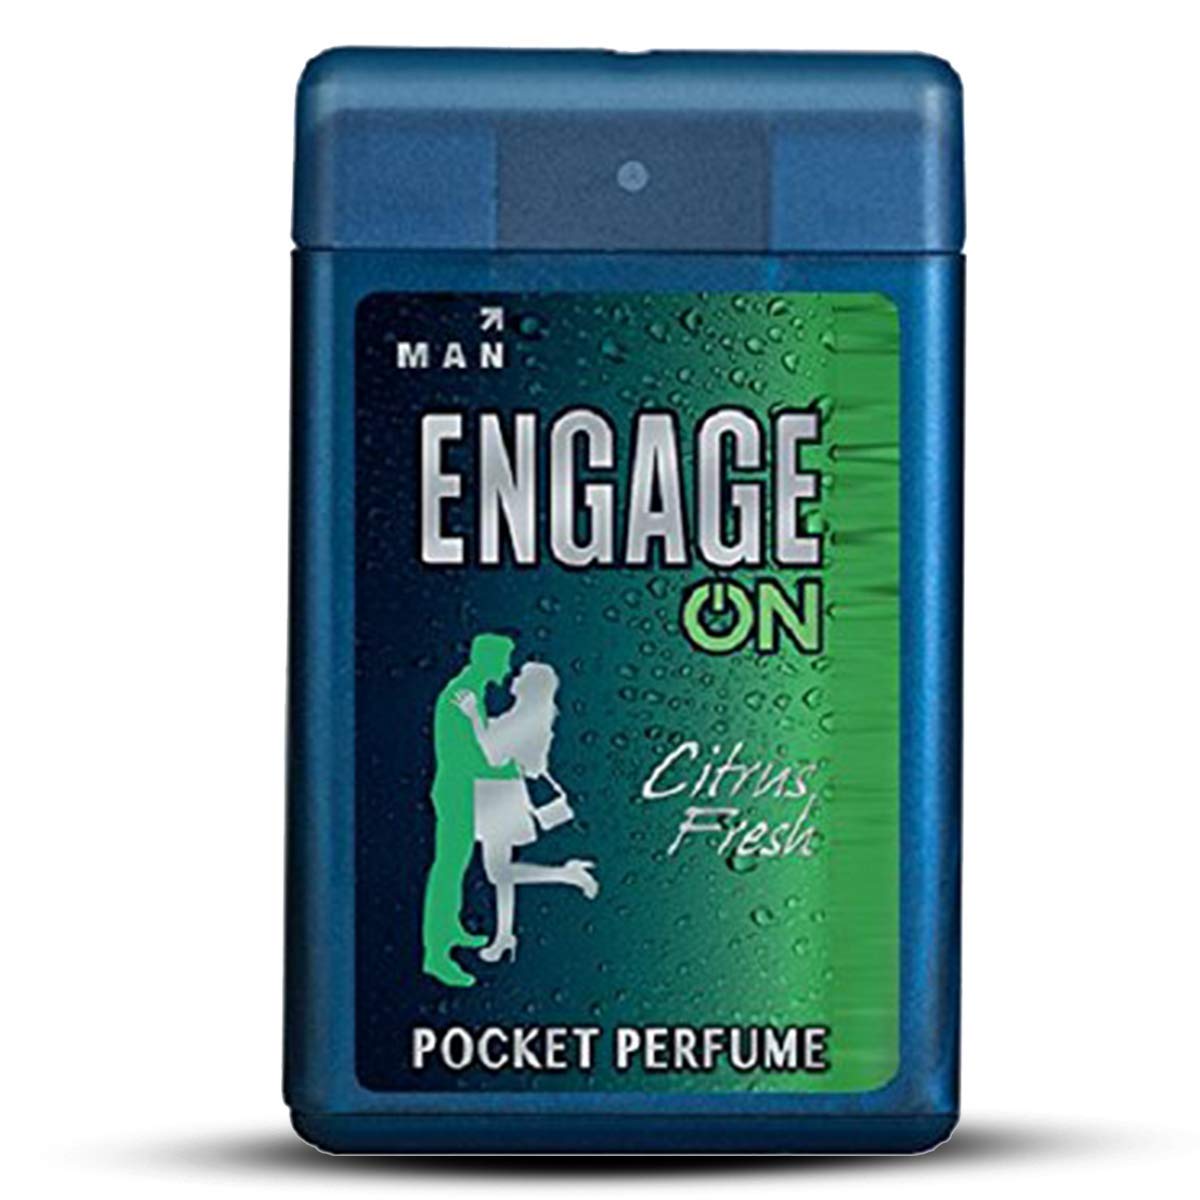 Engage On Man Citrus Fresh Pocket Perfume, 18 ml, Pack of 1 